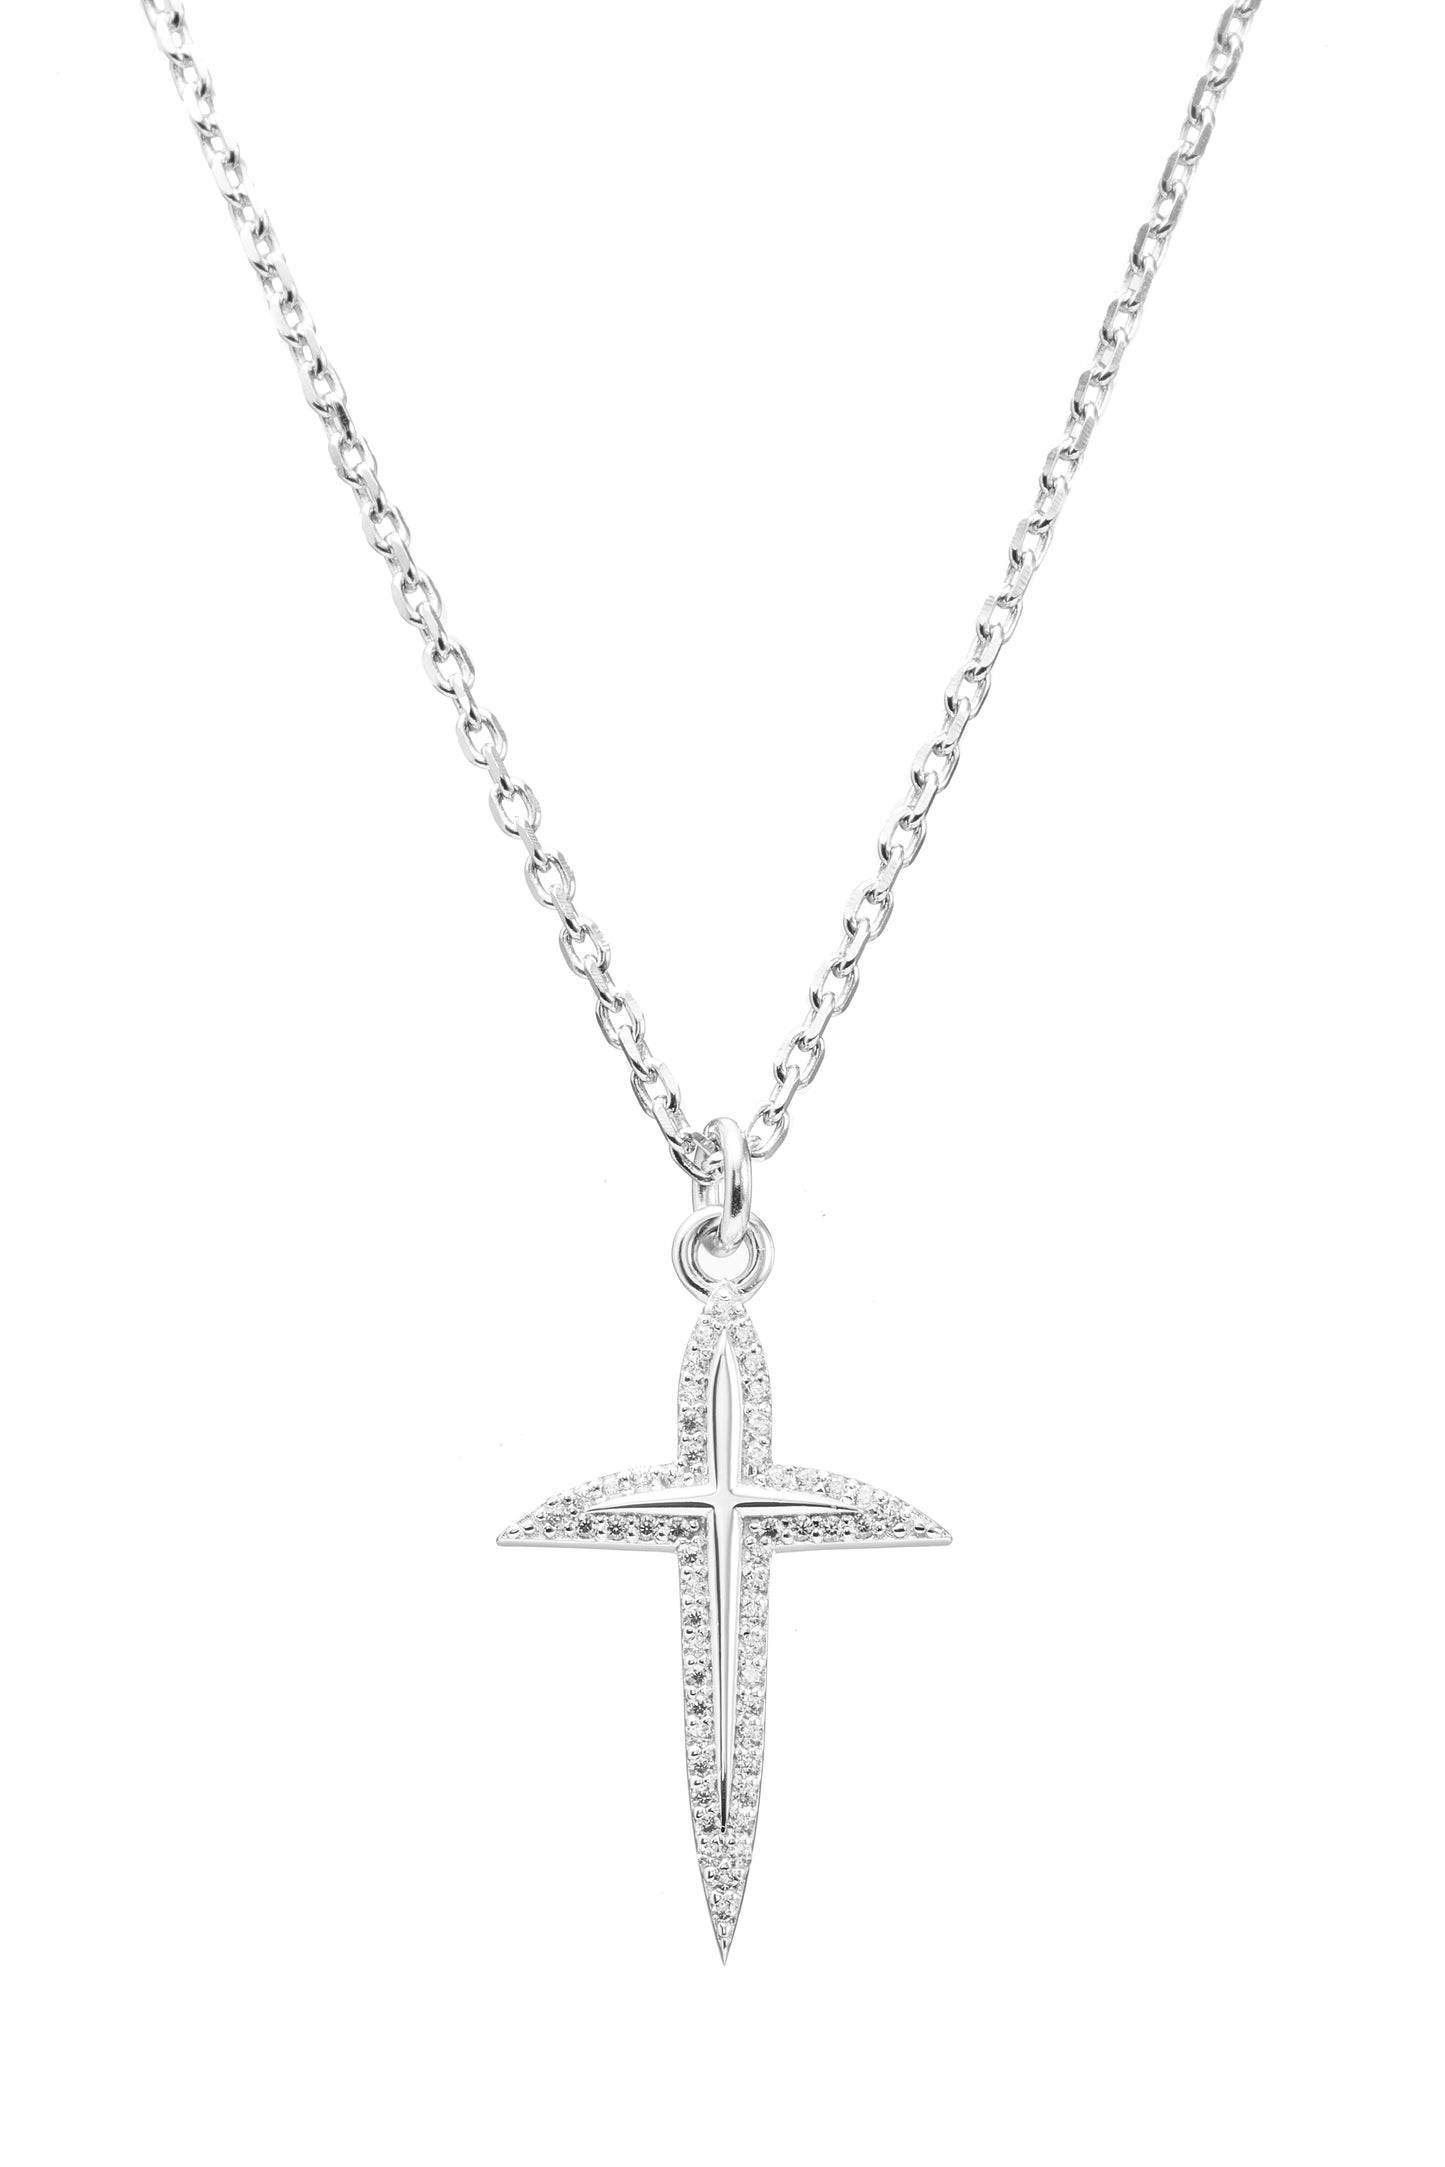 LUZ Series - Light Necklace - External Diamond (Silver)